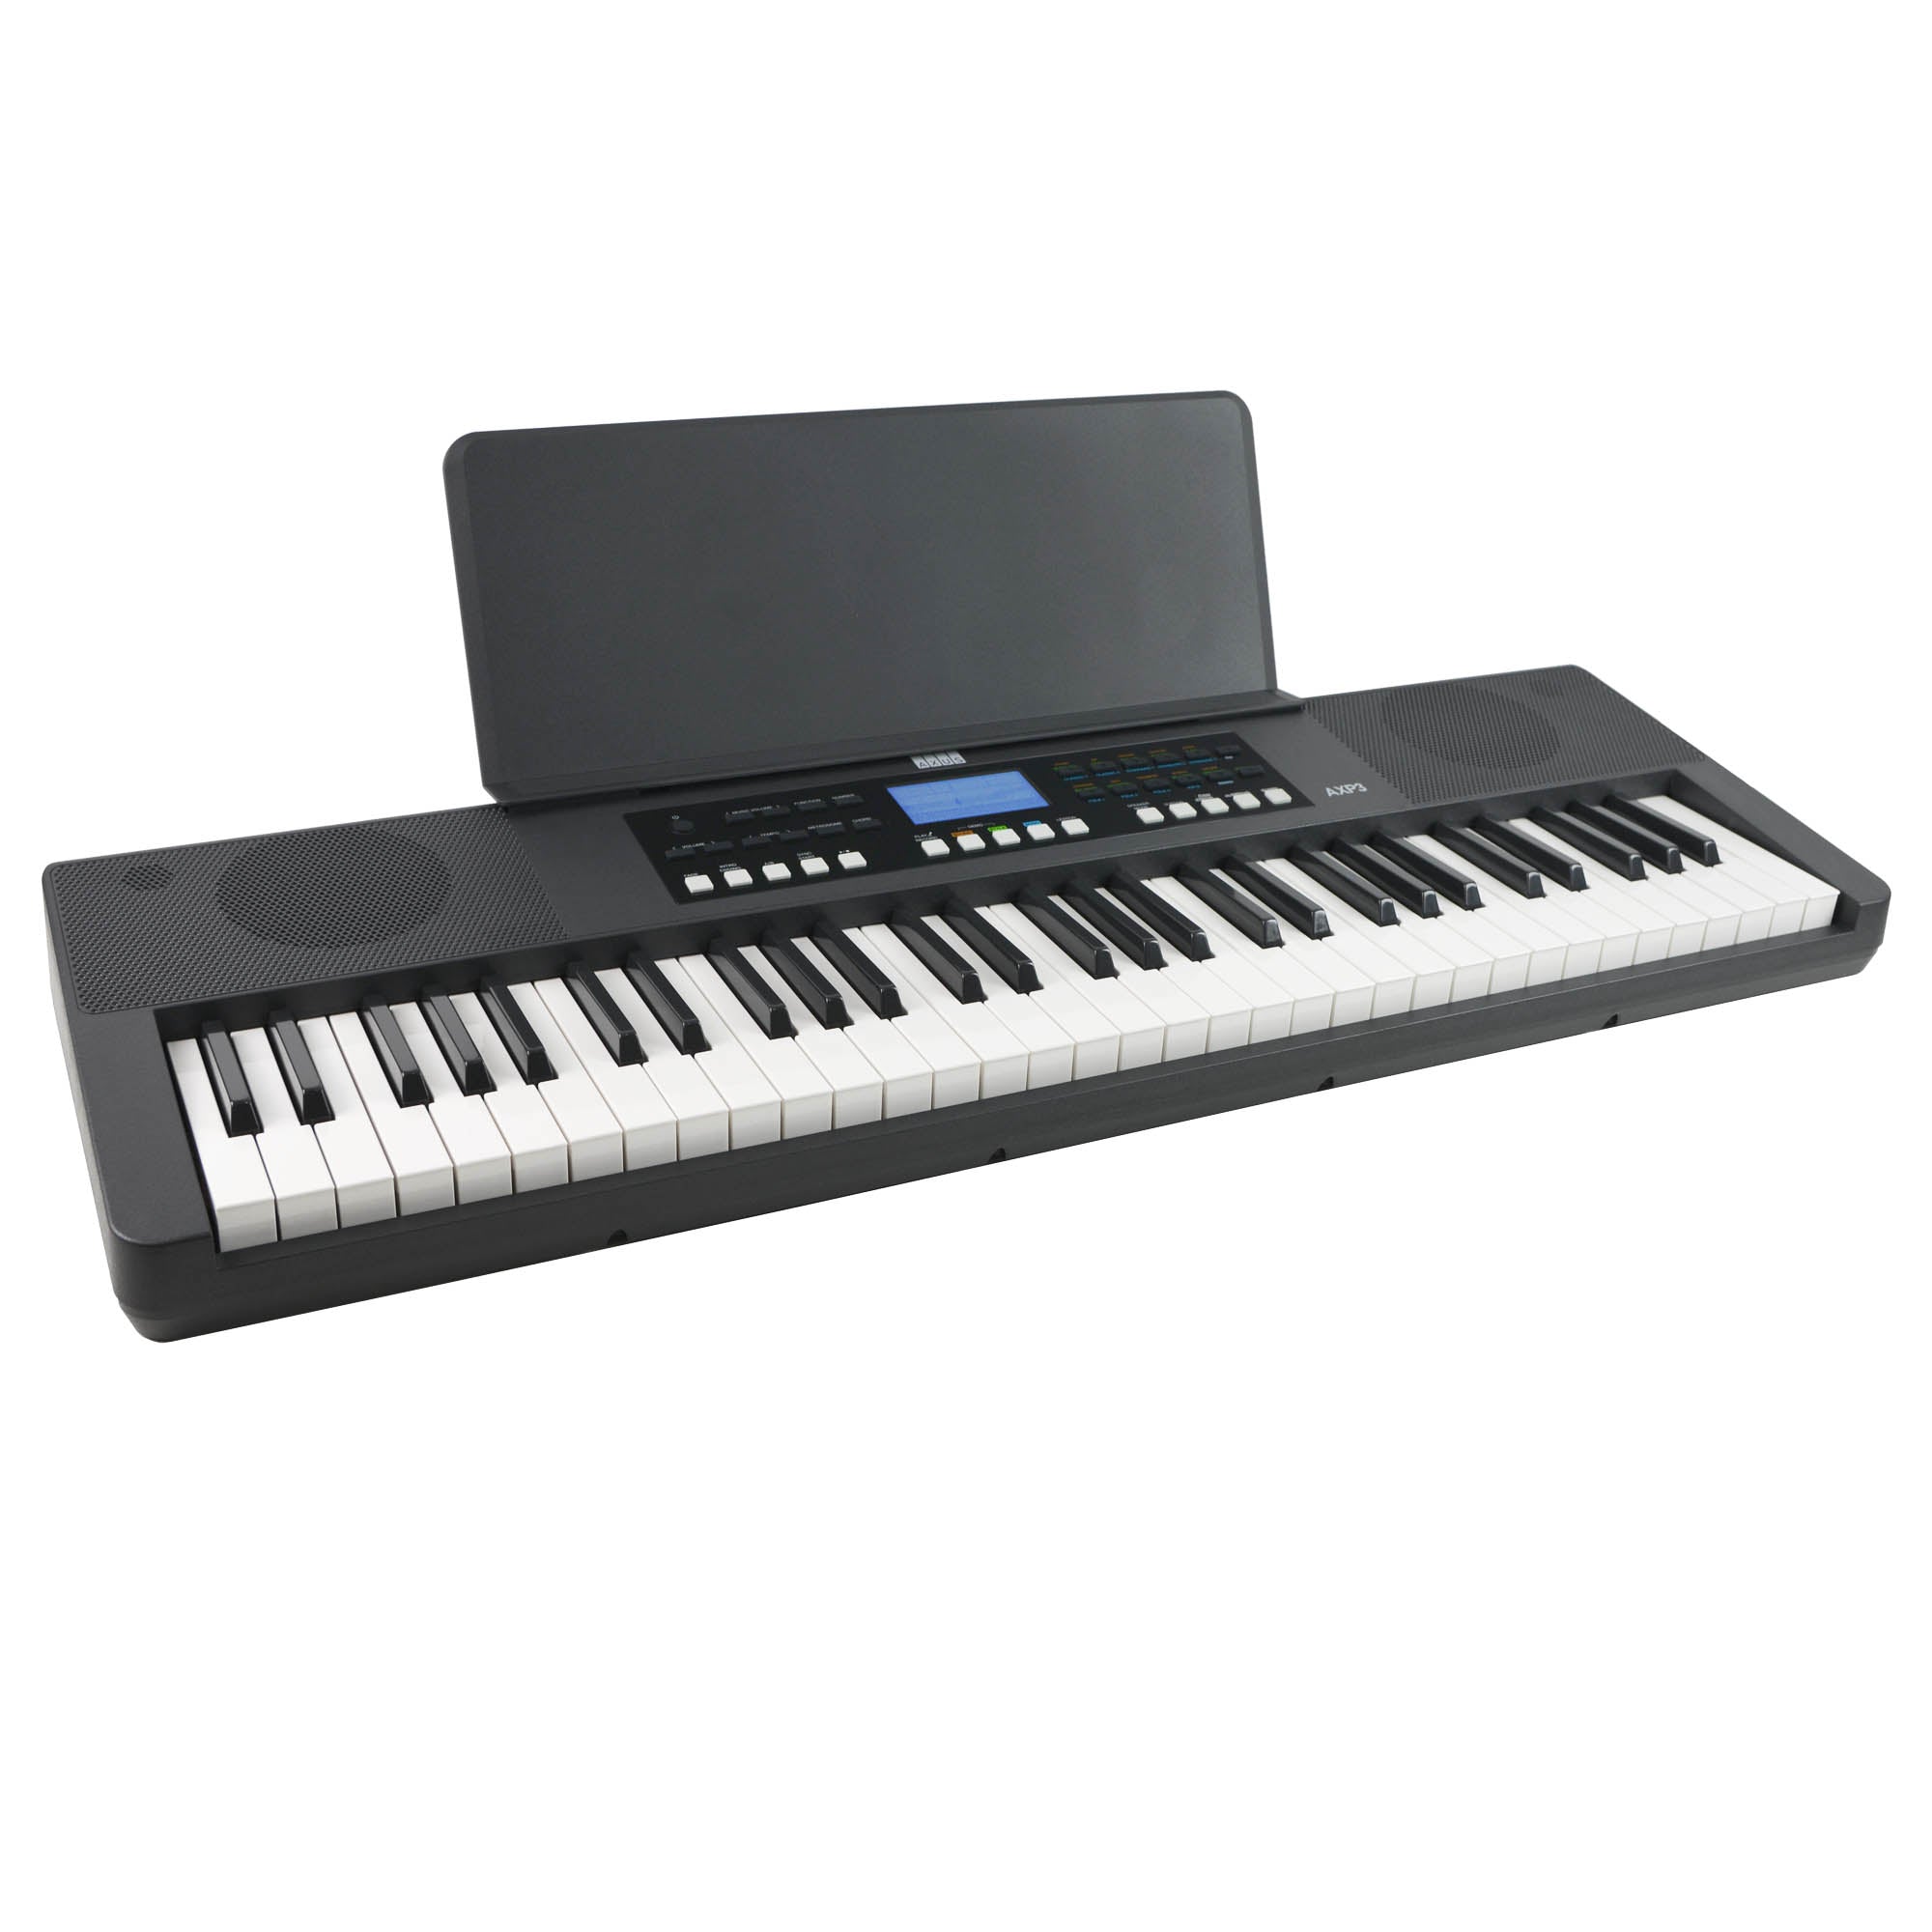 Axus 61 Note Slimline Portable Keyboard